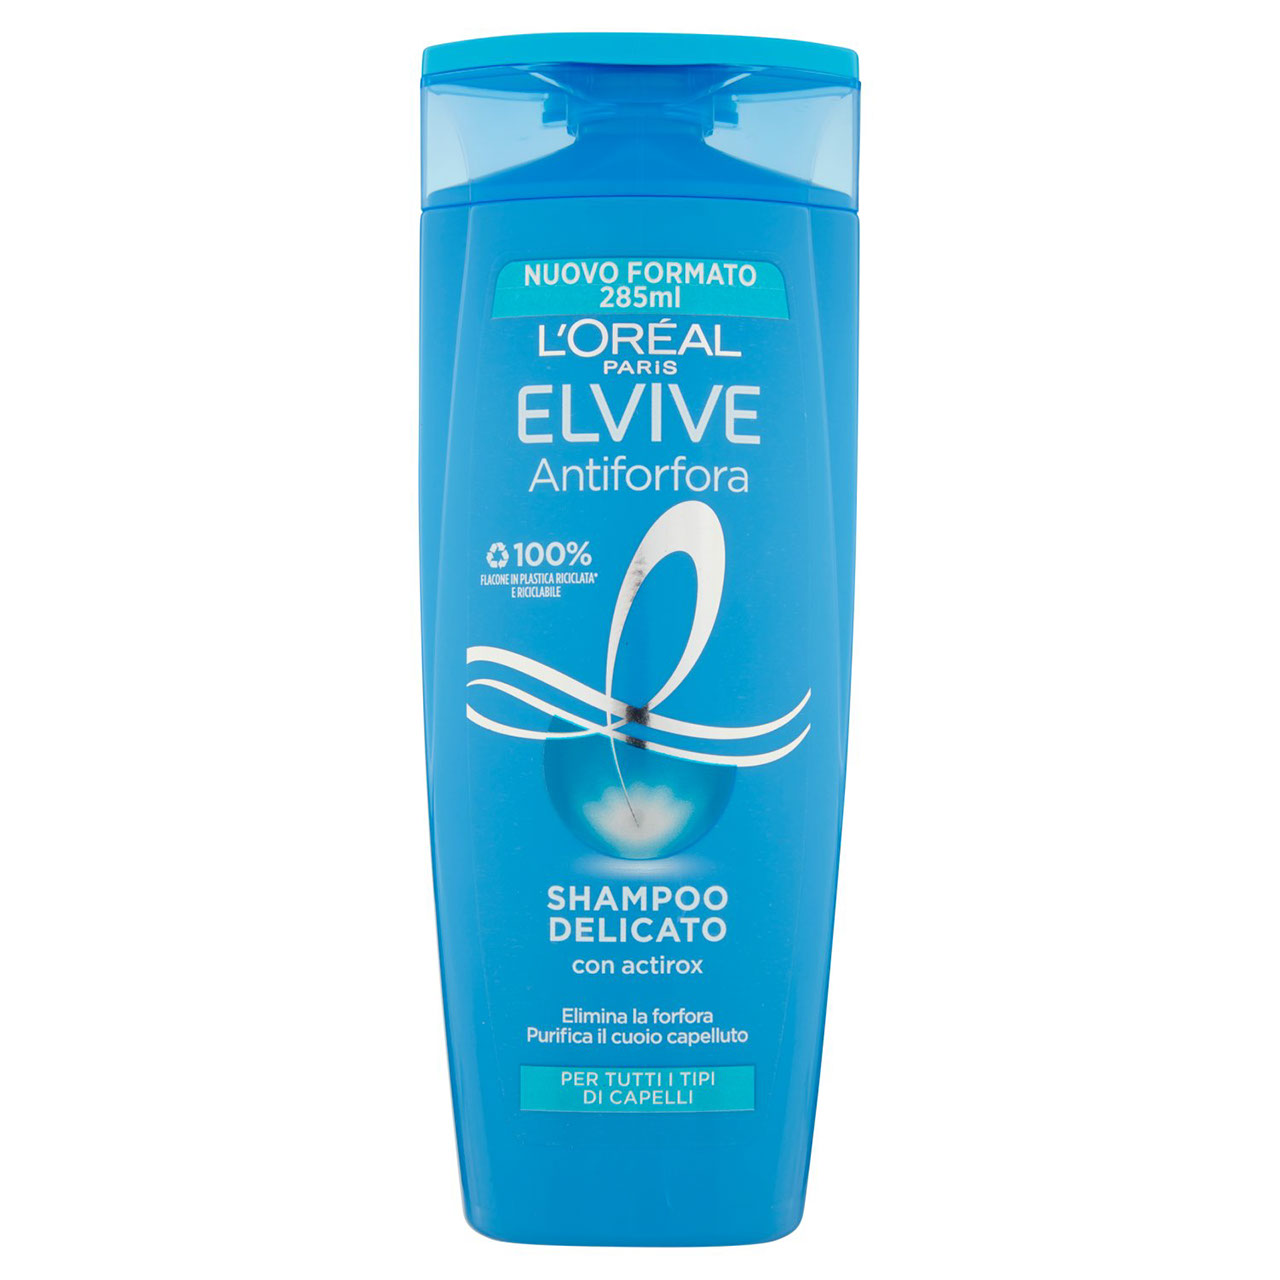 Shampoo Elvive Antiforfora, in vendita online